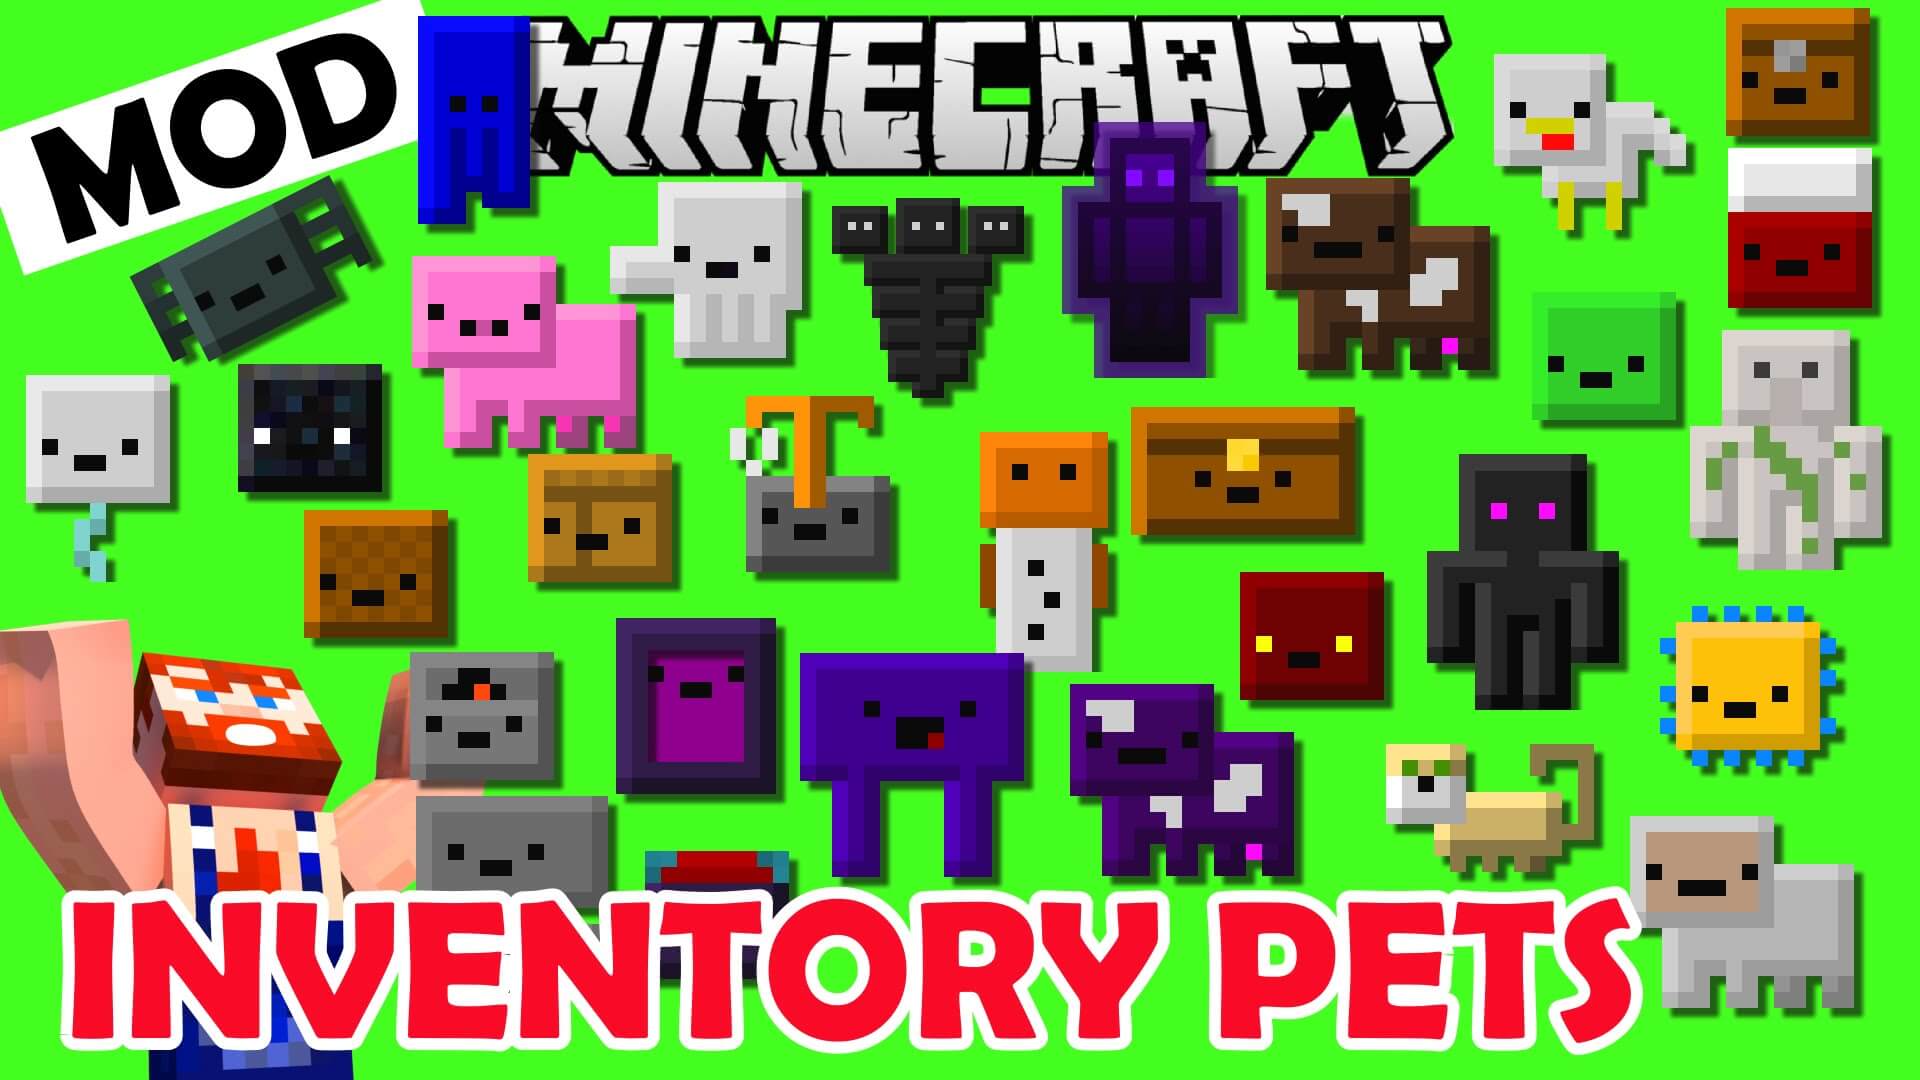 Inventory Pets screenshot 1